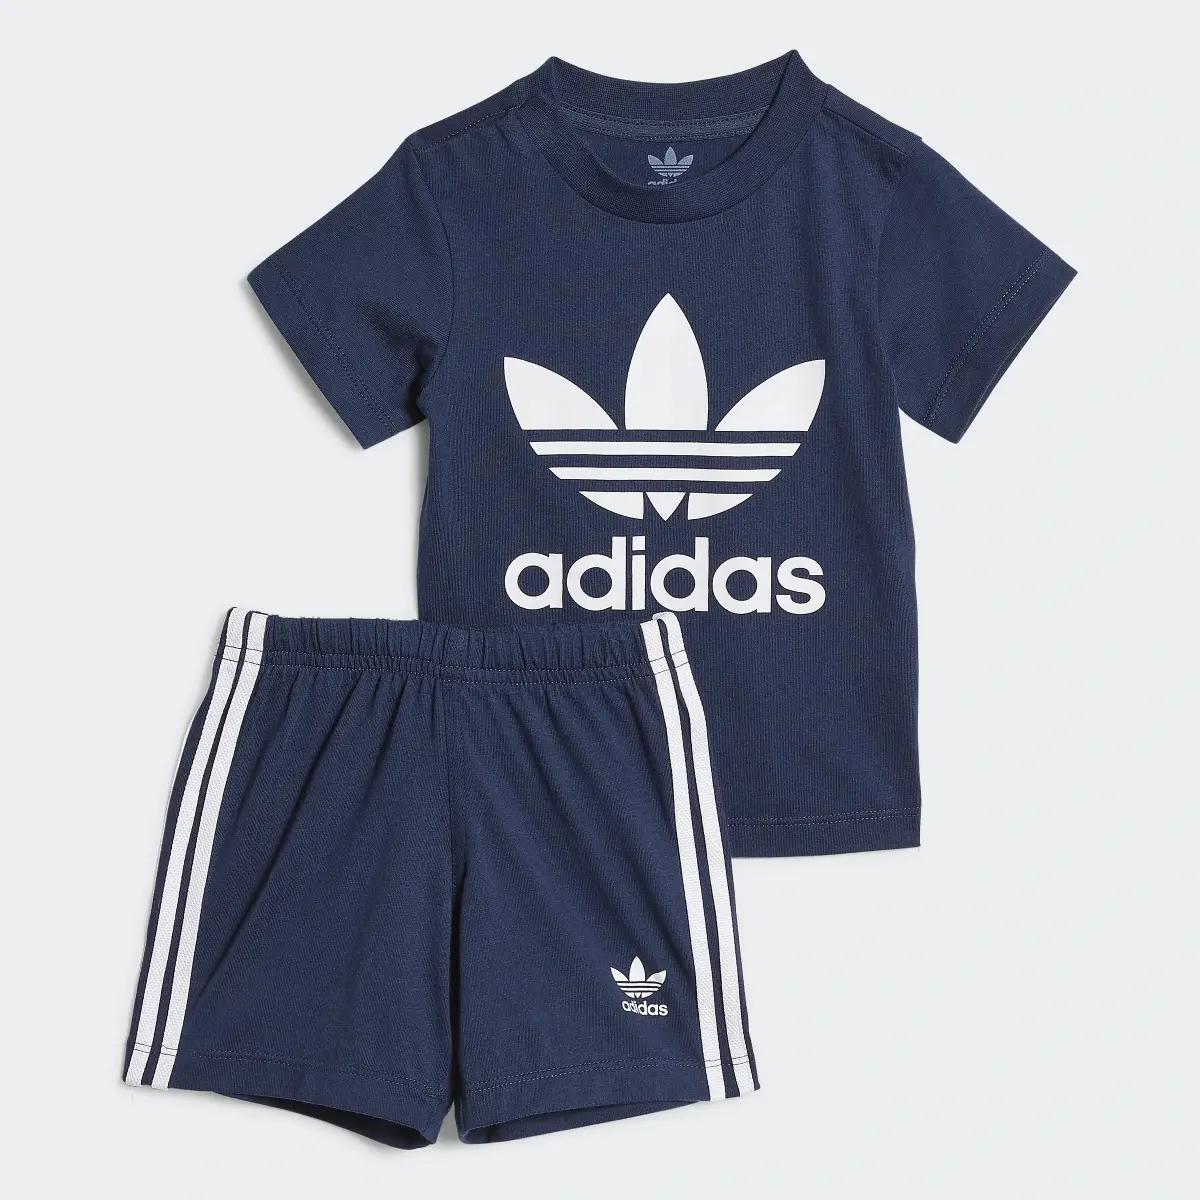 Adidas Adicolor Trefoil Shorts Tee Set. 1